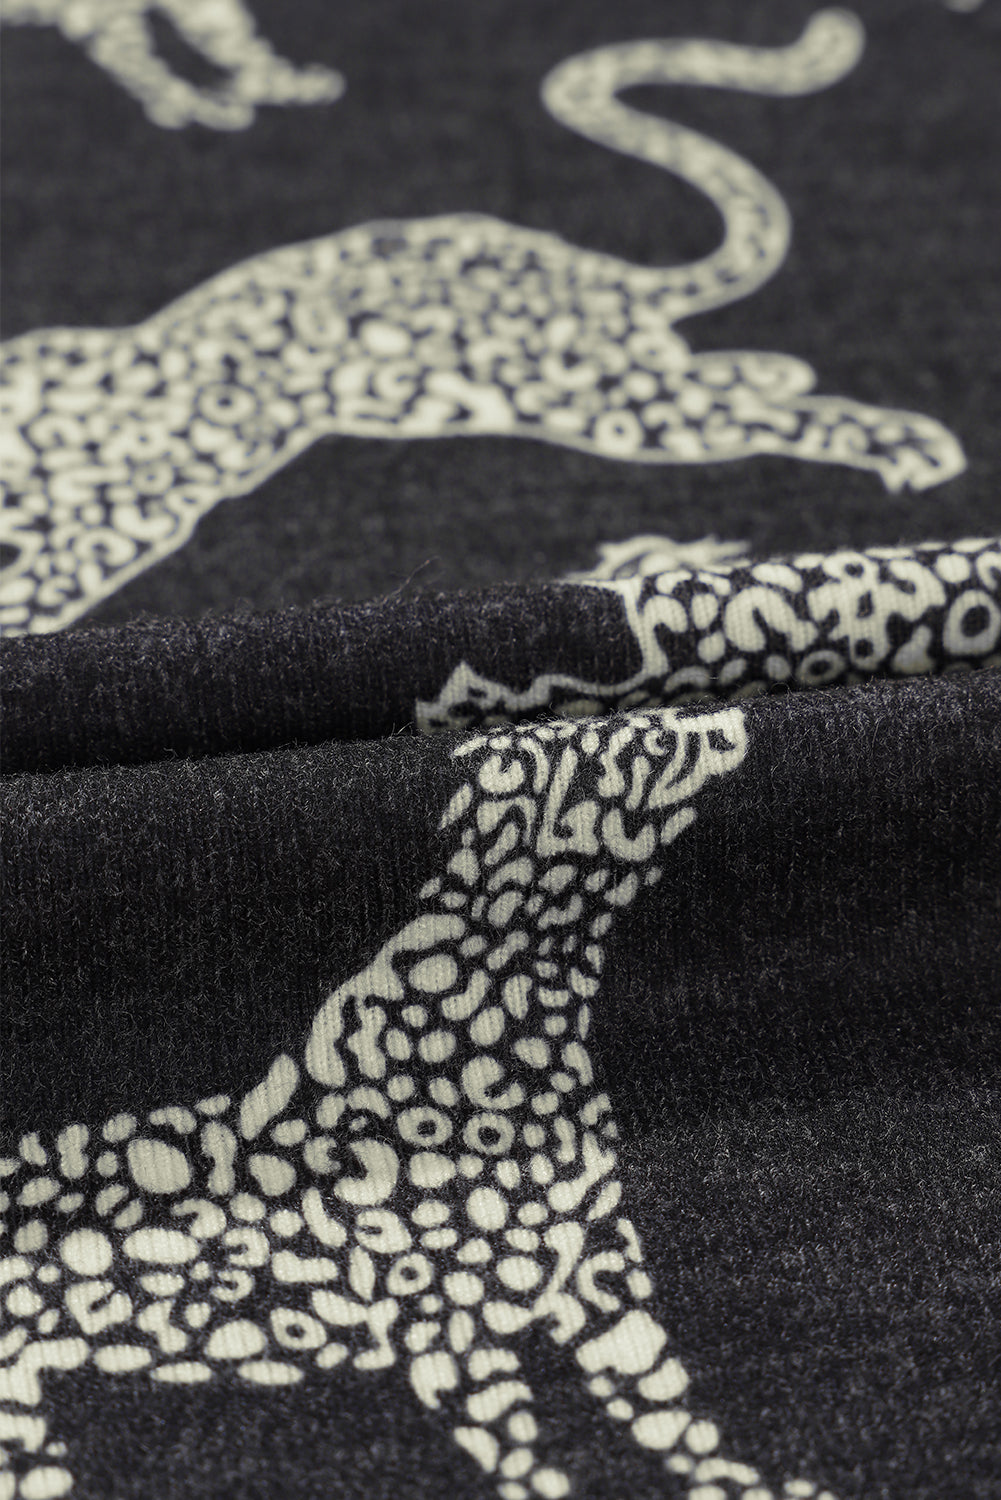 Black Lively Cheetah Print Long Sleeve Top